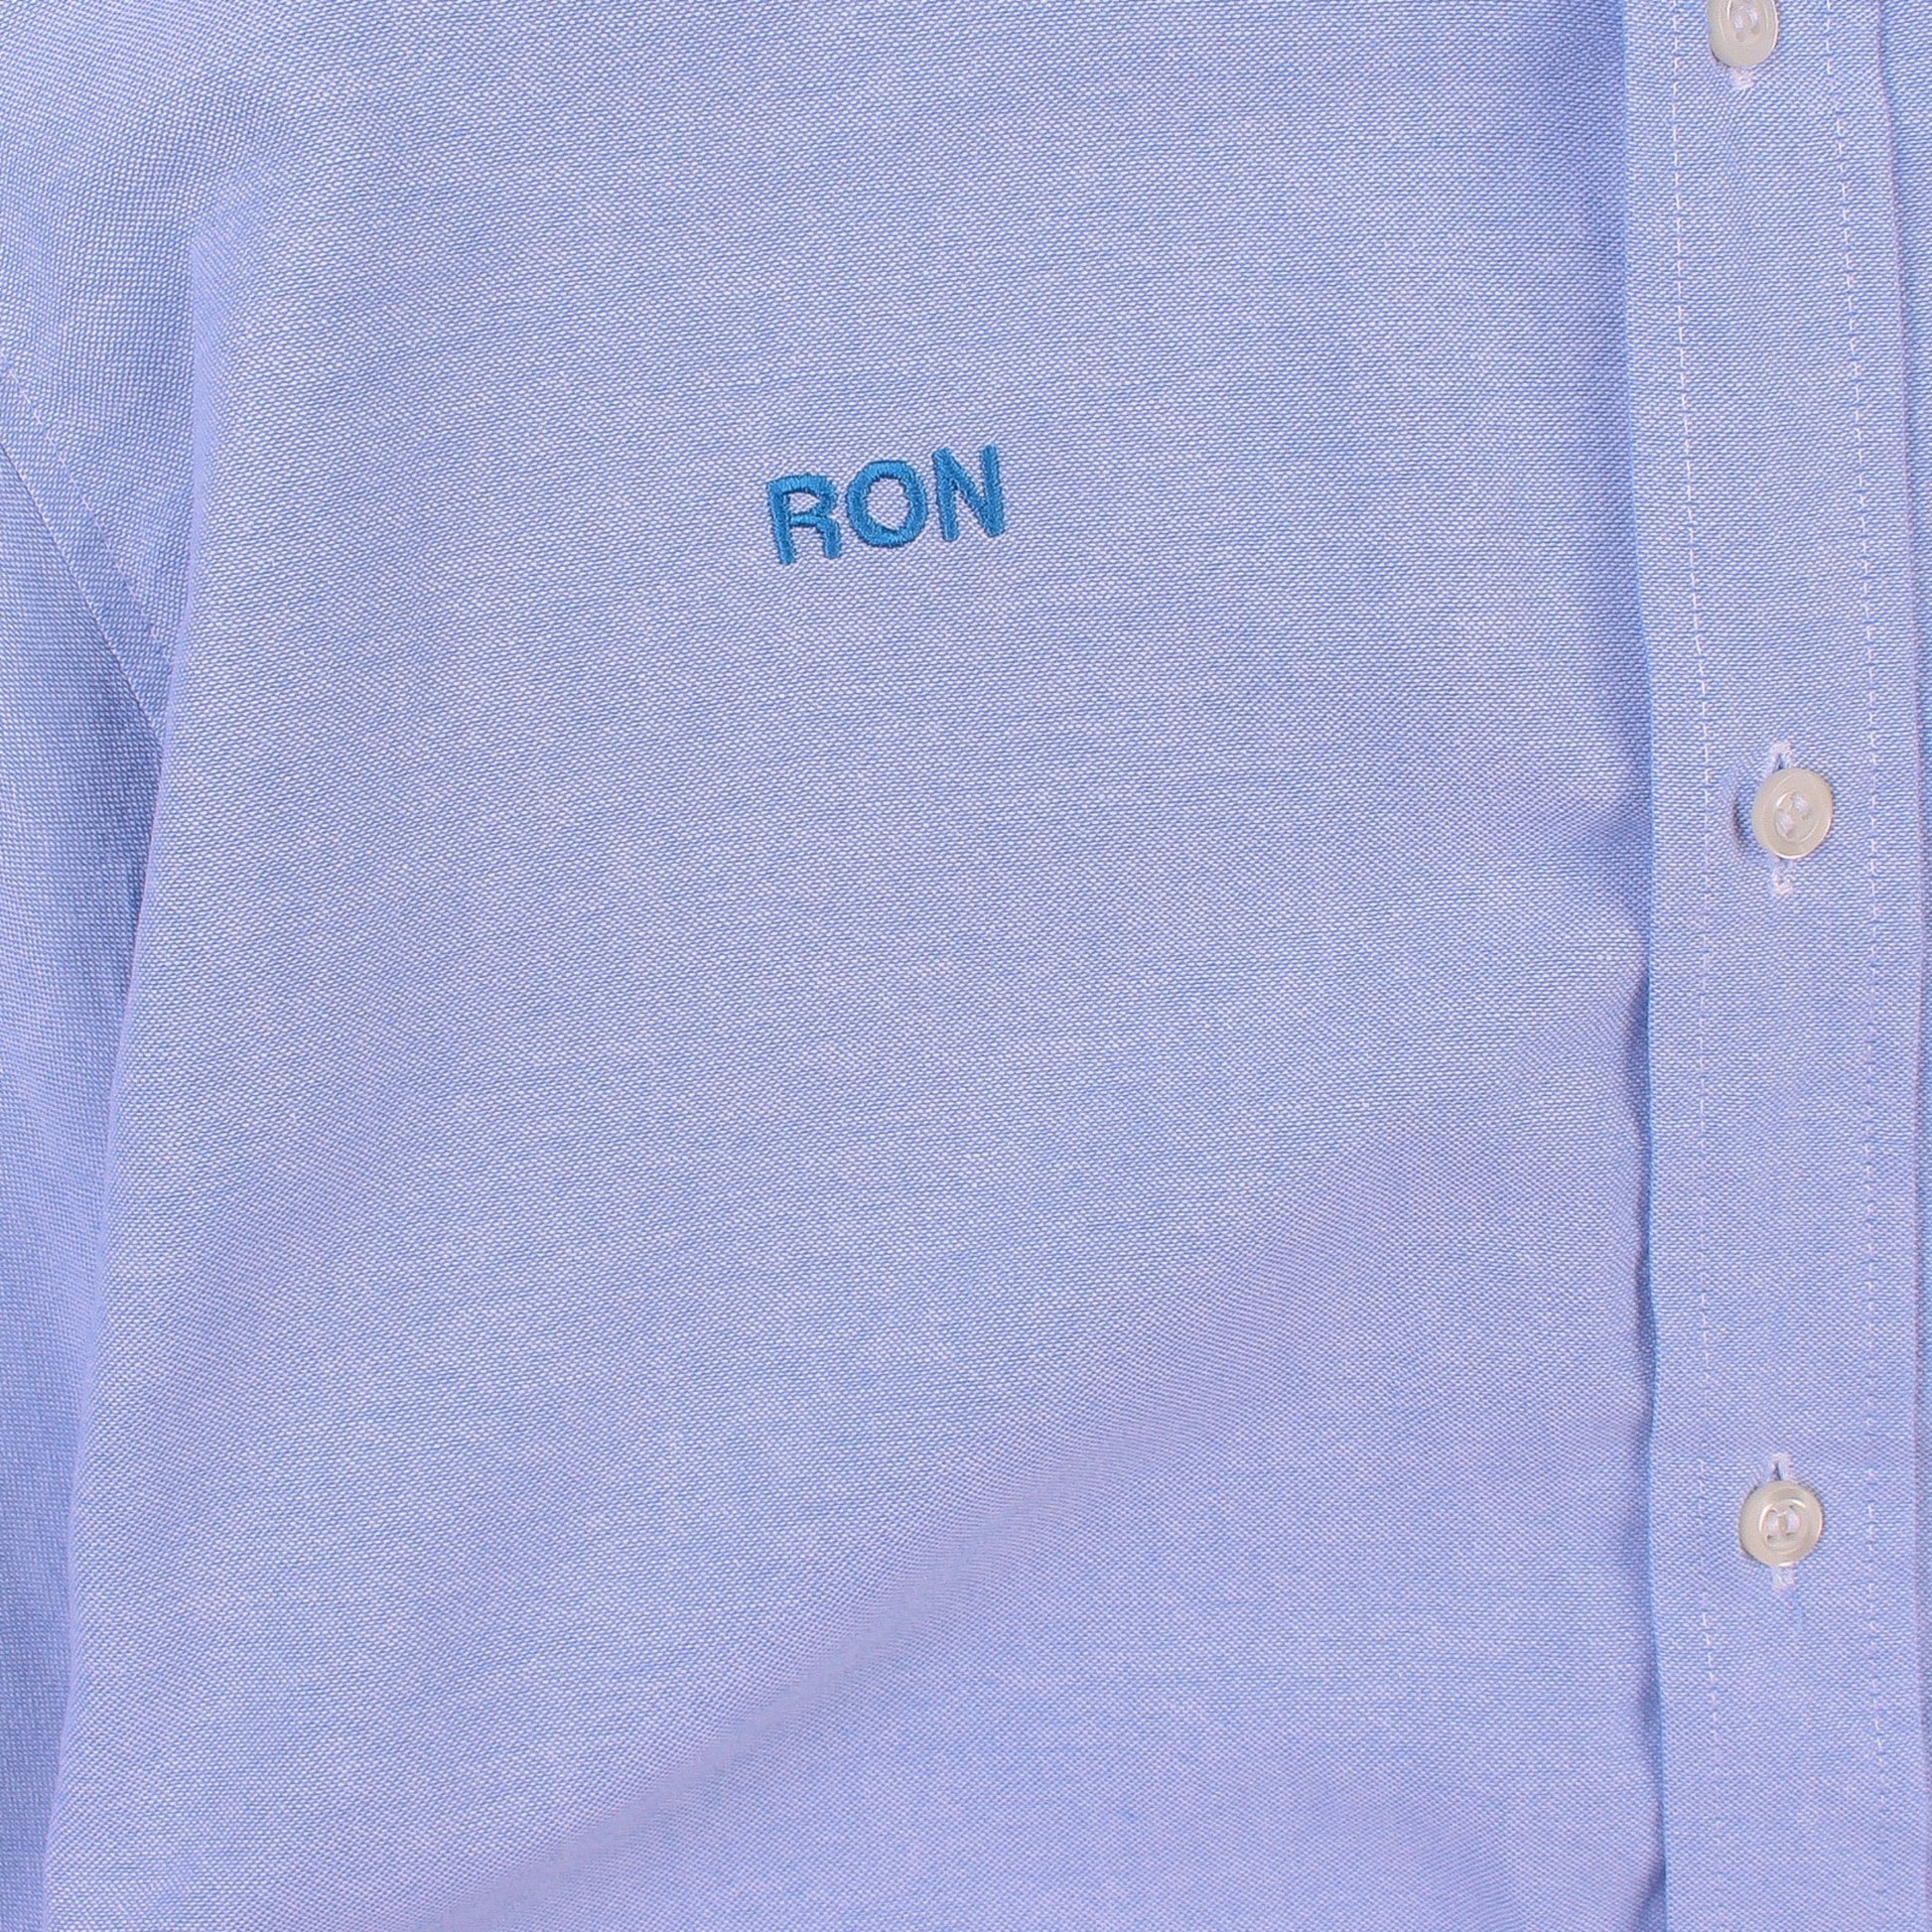 'Ron' Garage Work Shirt - American Madness